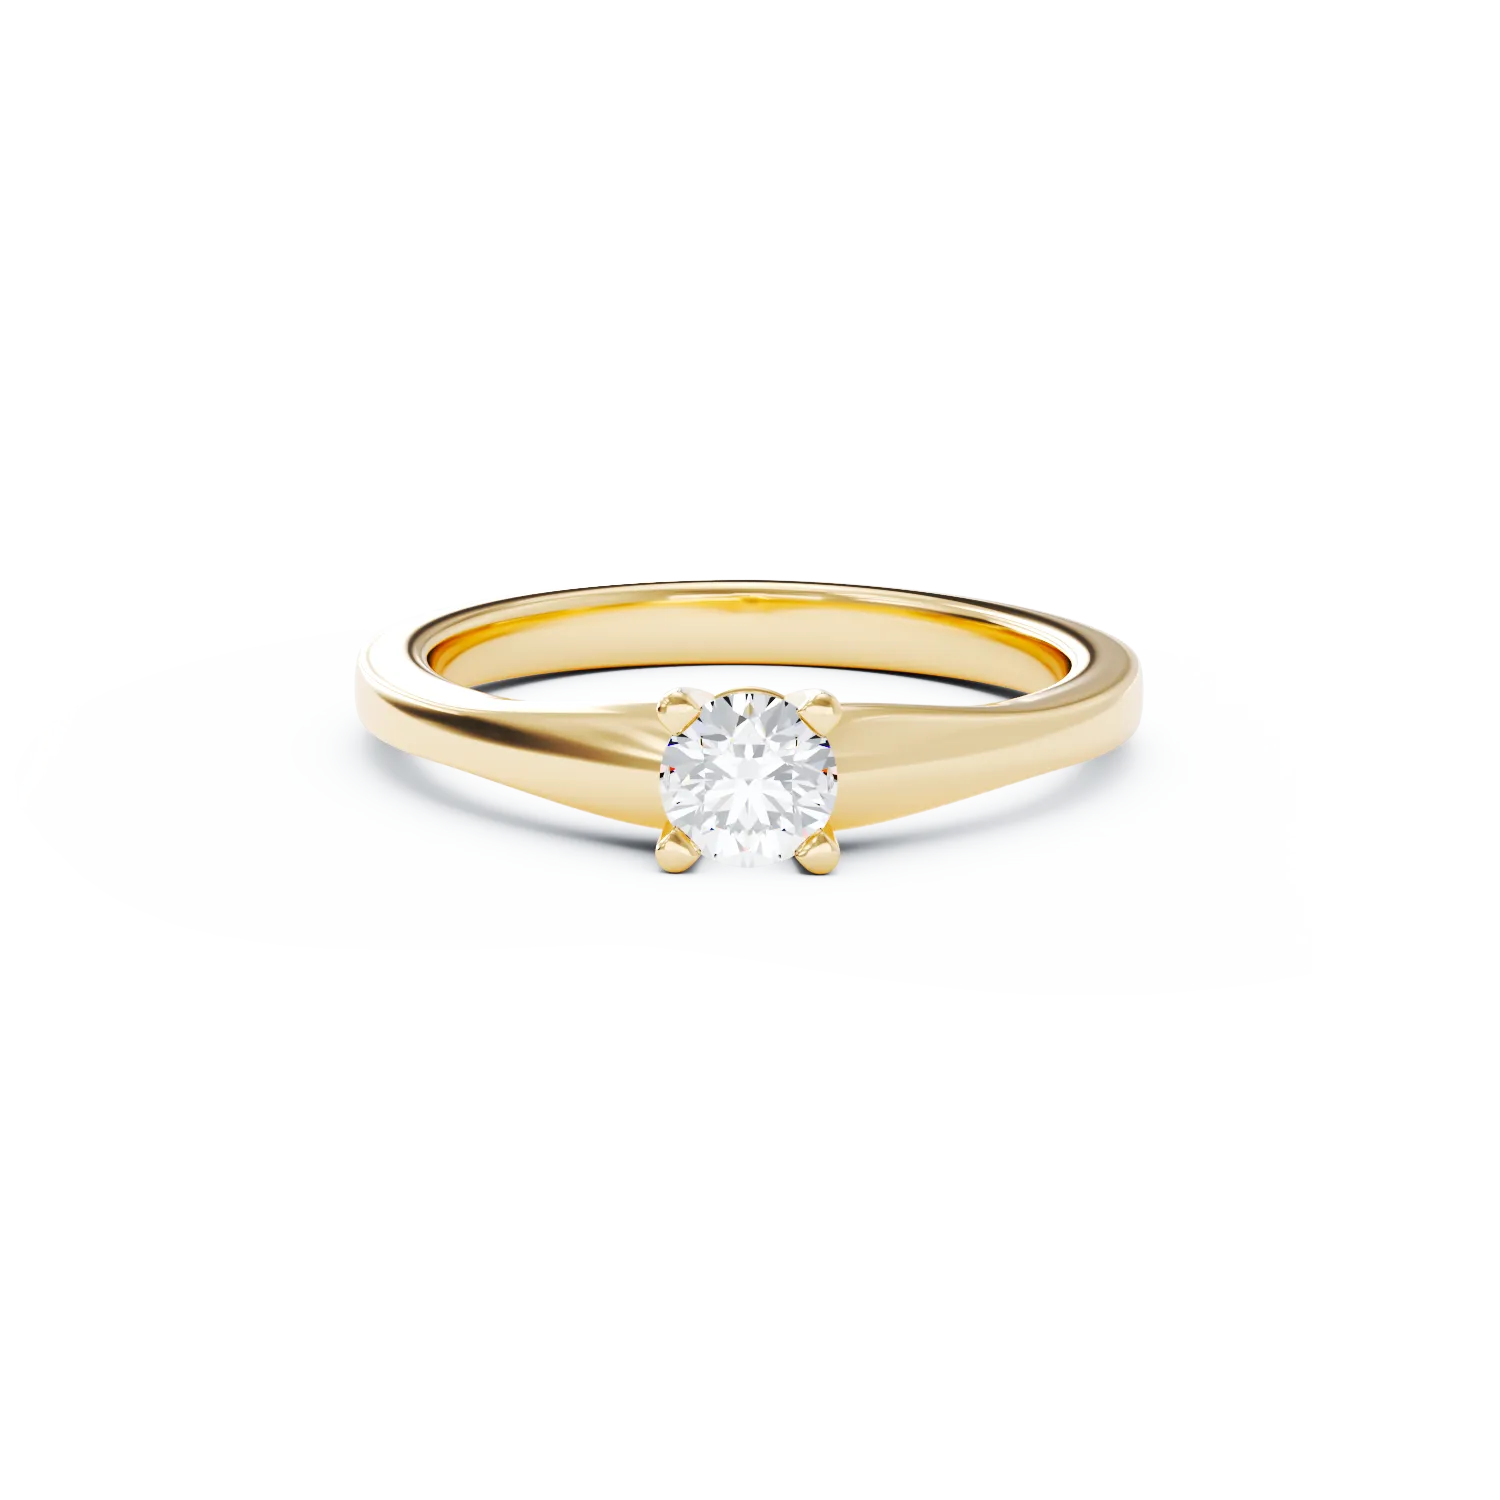 Inel de logodna din aur galben de 18K cu un diamant solitaire de 0.25ct